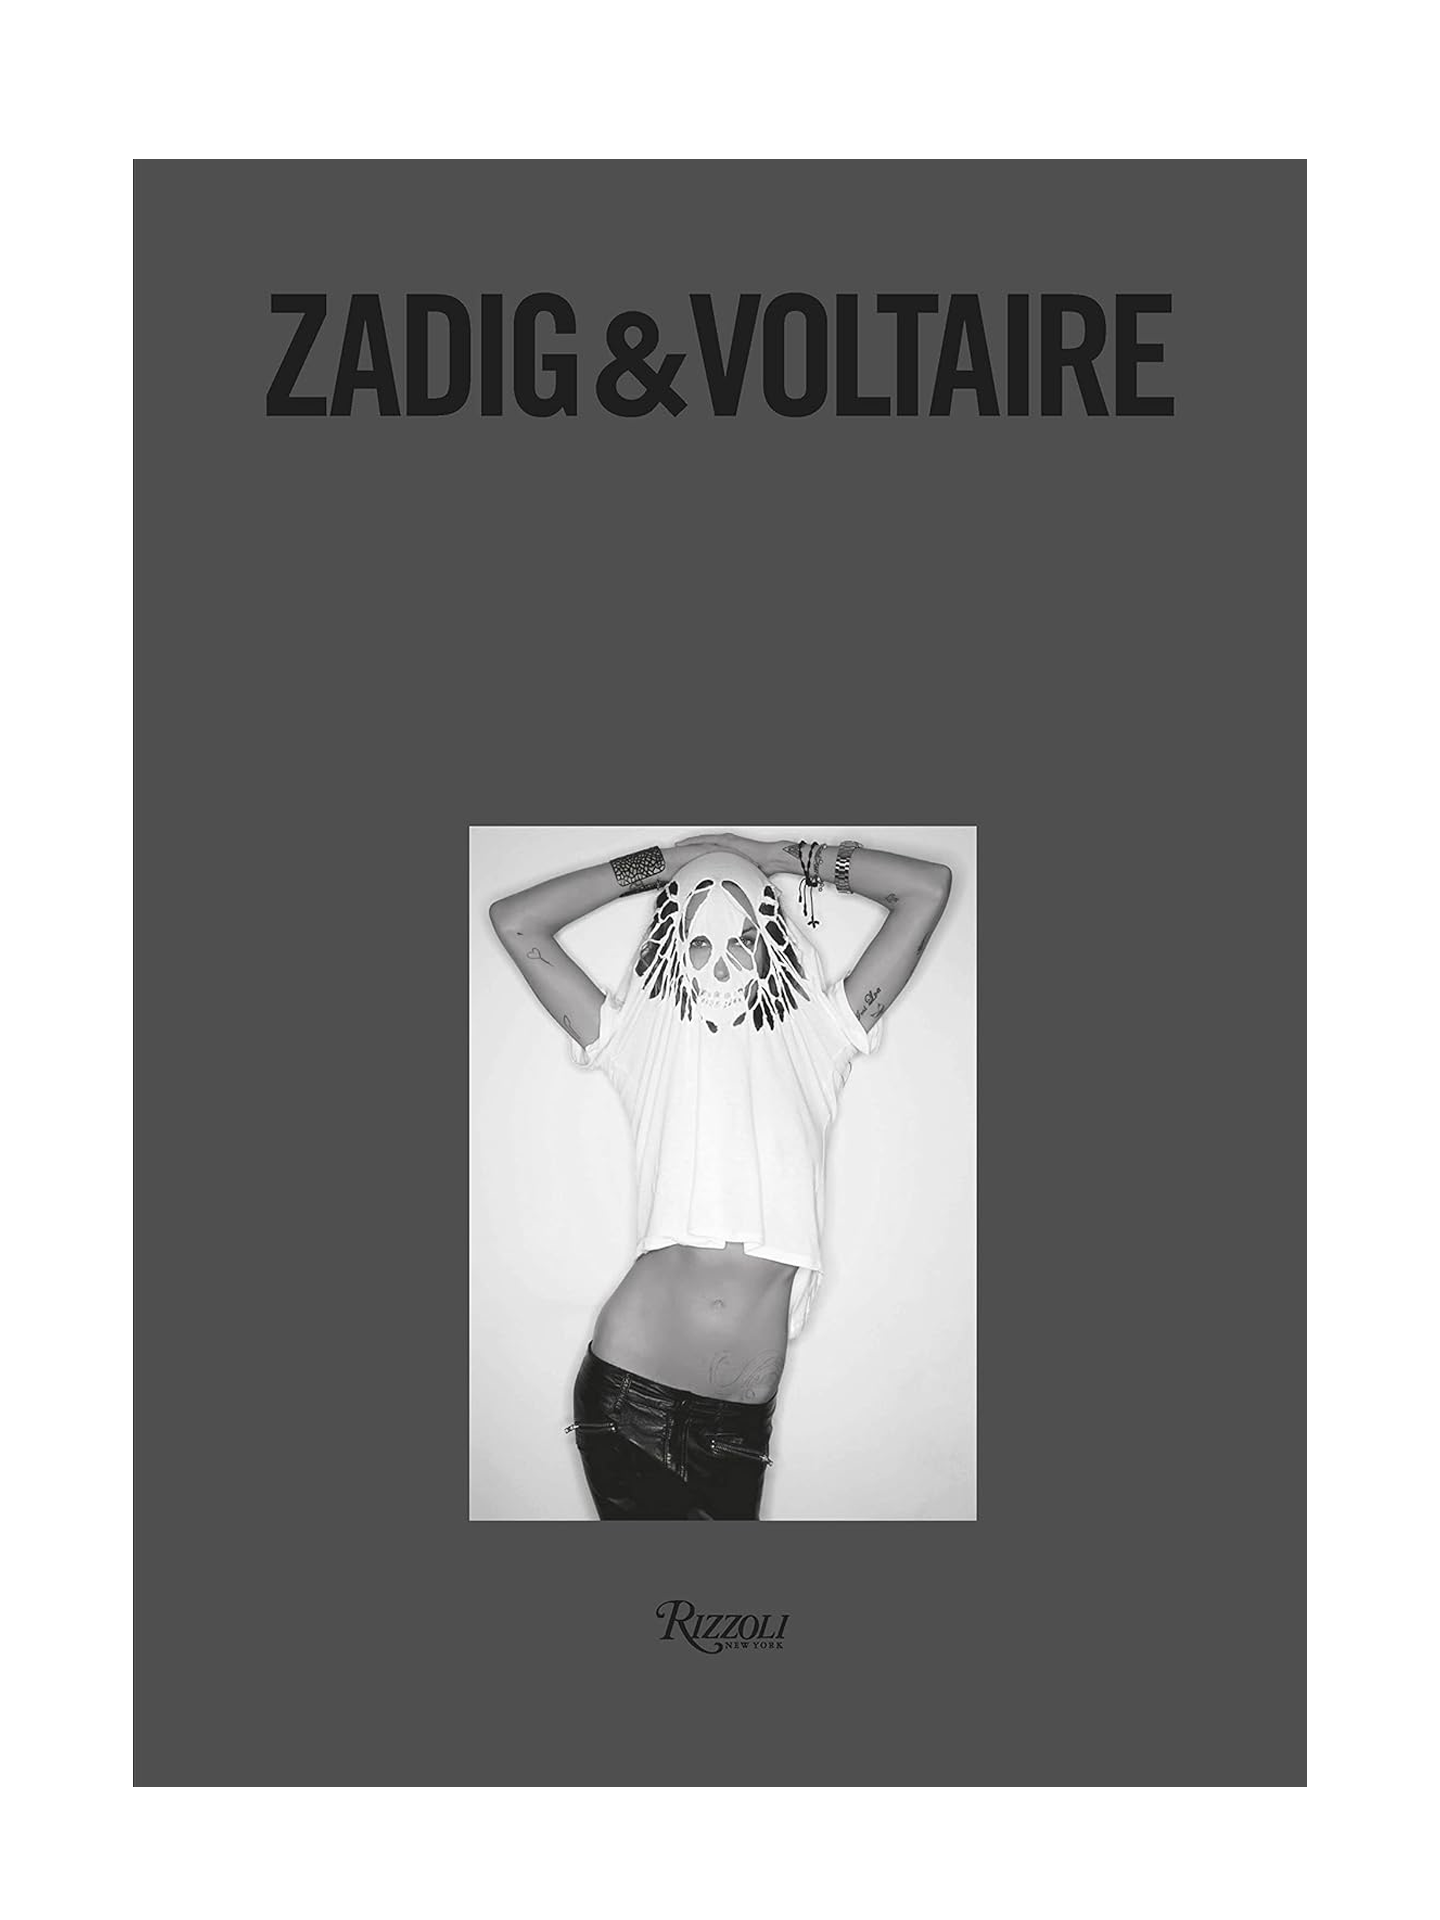 Zadig & Voltaire – Established 1997 in Paris